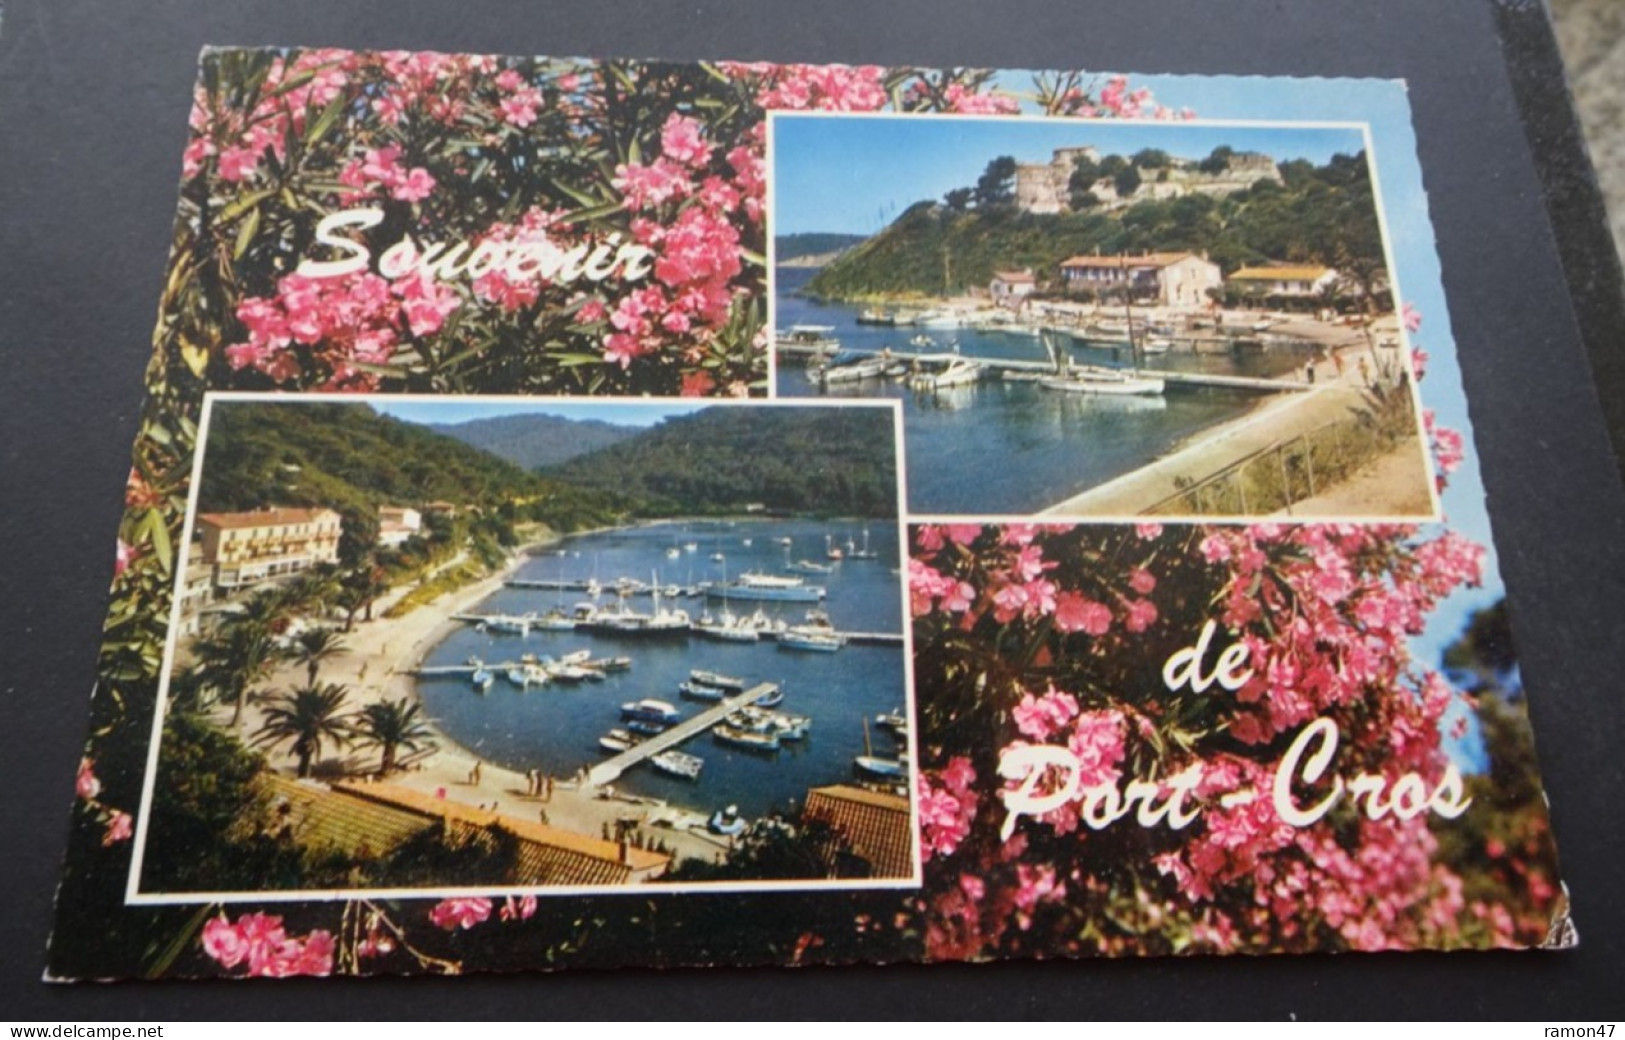 Souvenir De Port-Cros - Les Iles D'Or - Editions Rella, Nice - Hyeres